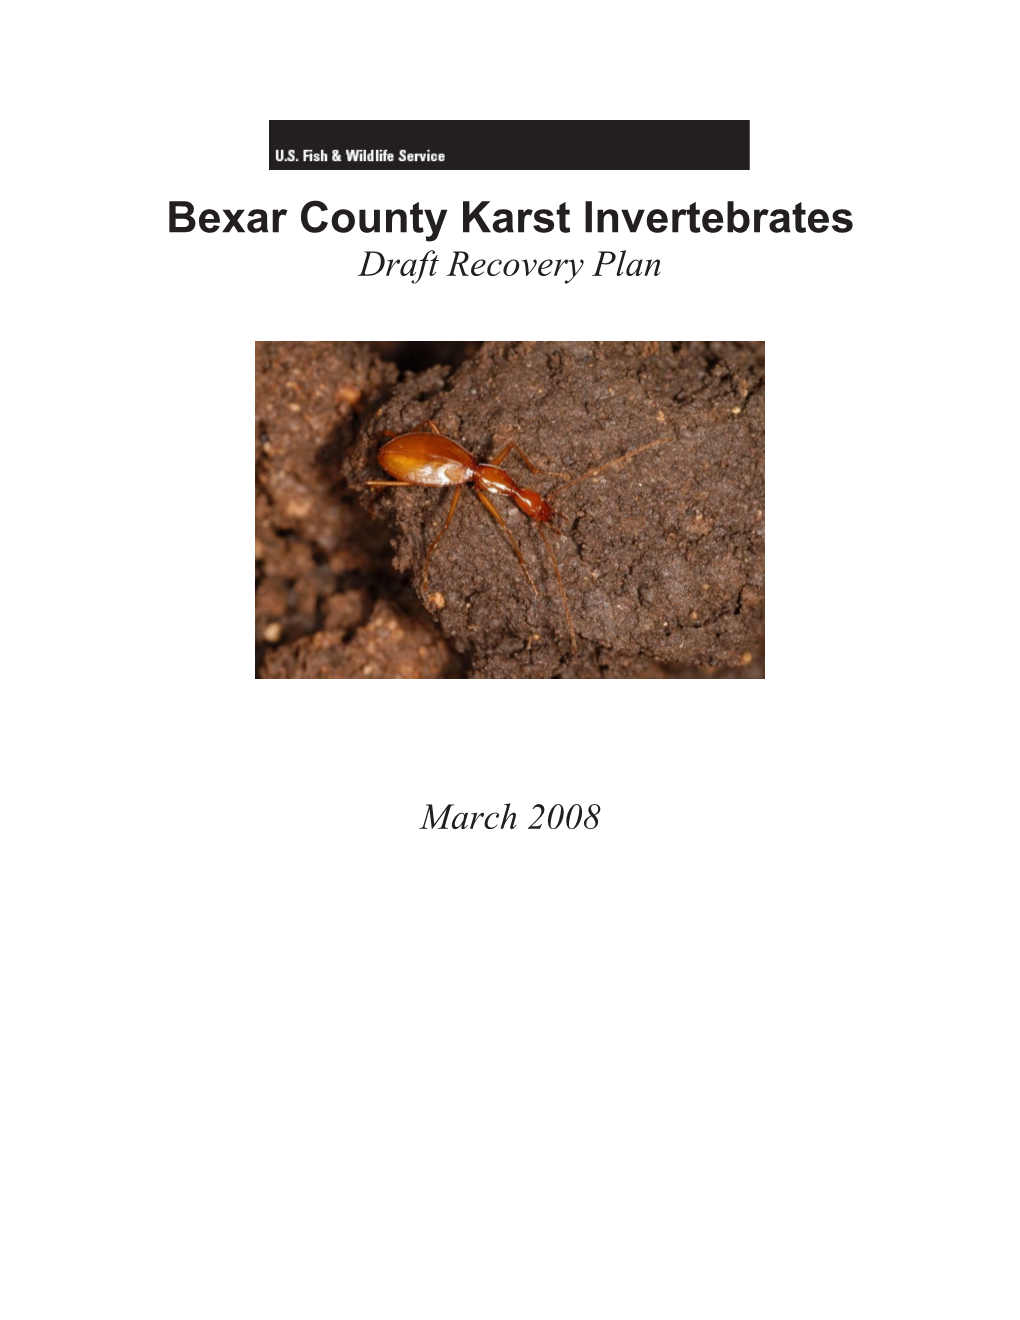 Bexar County Karst Invertebrates